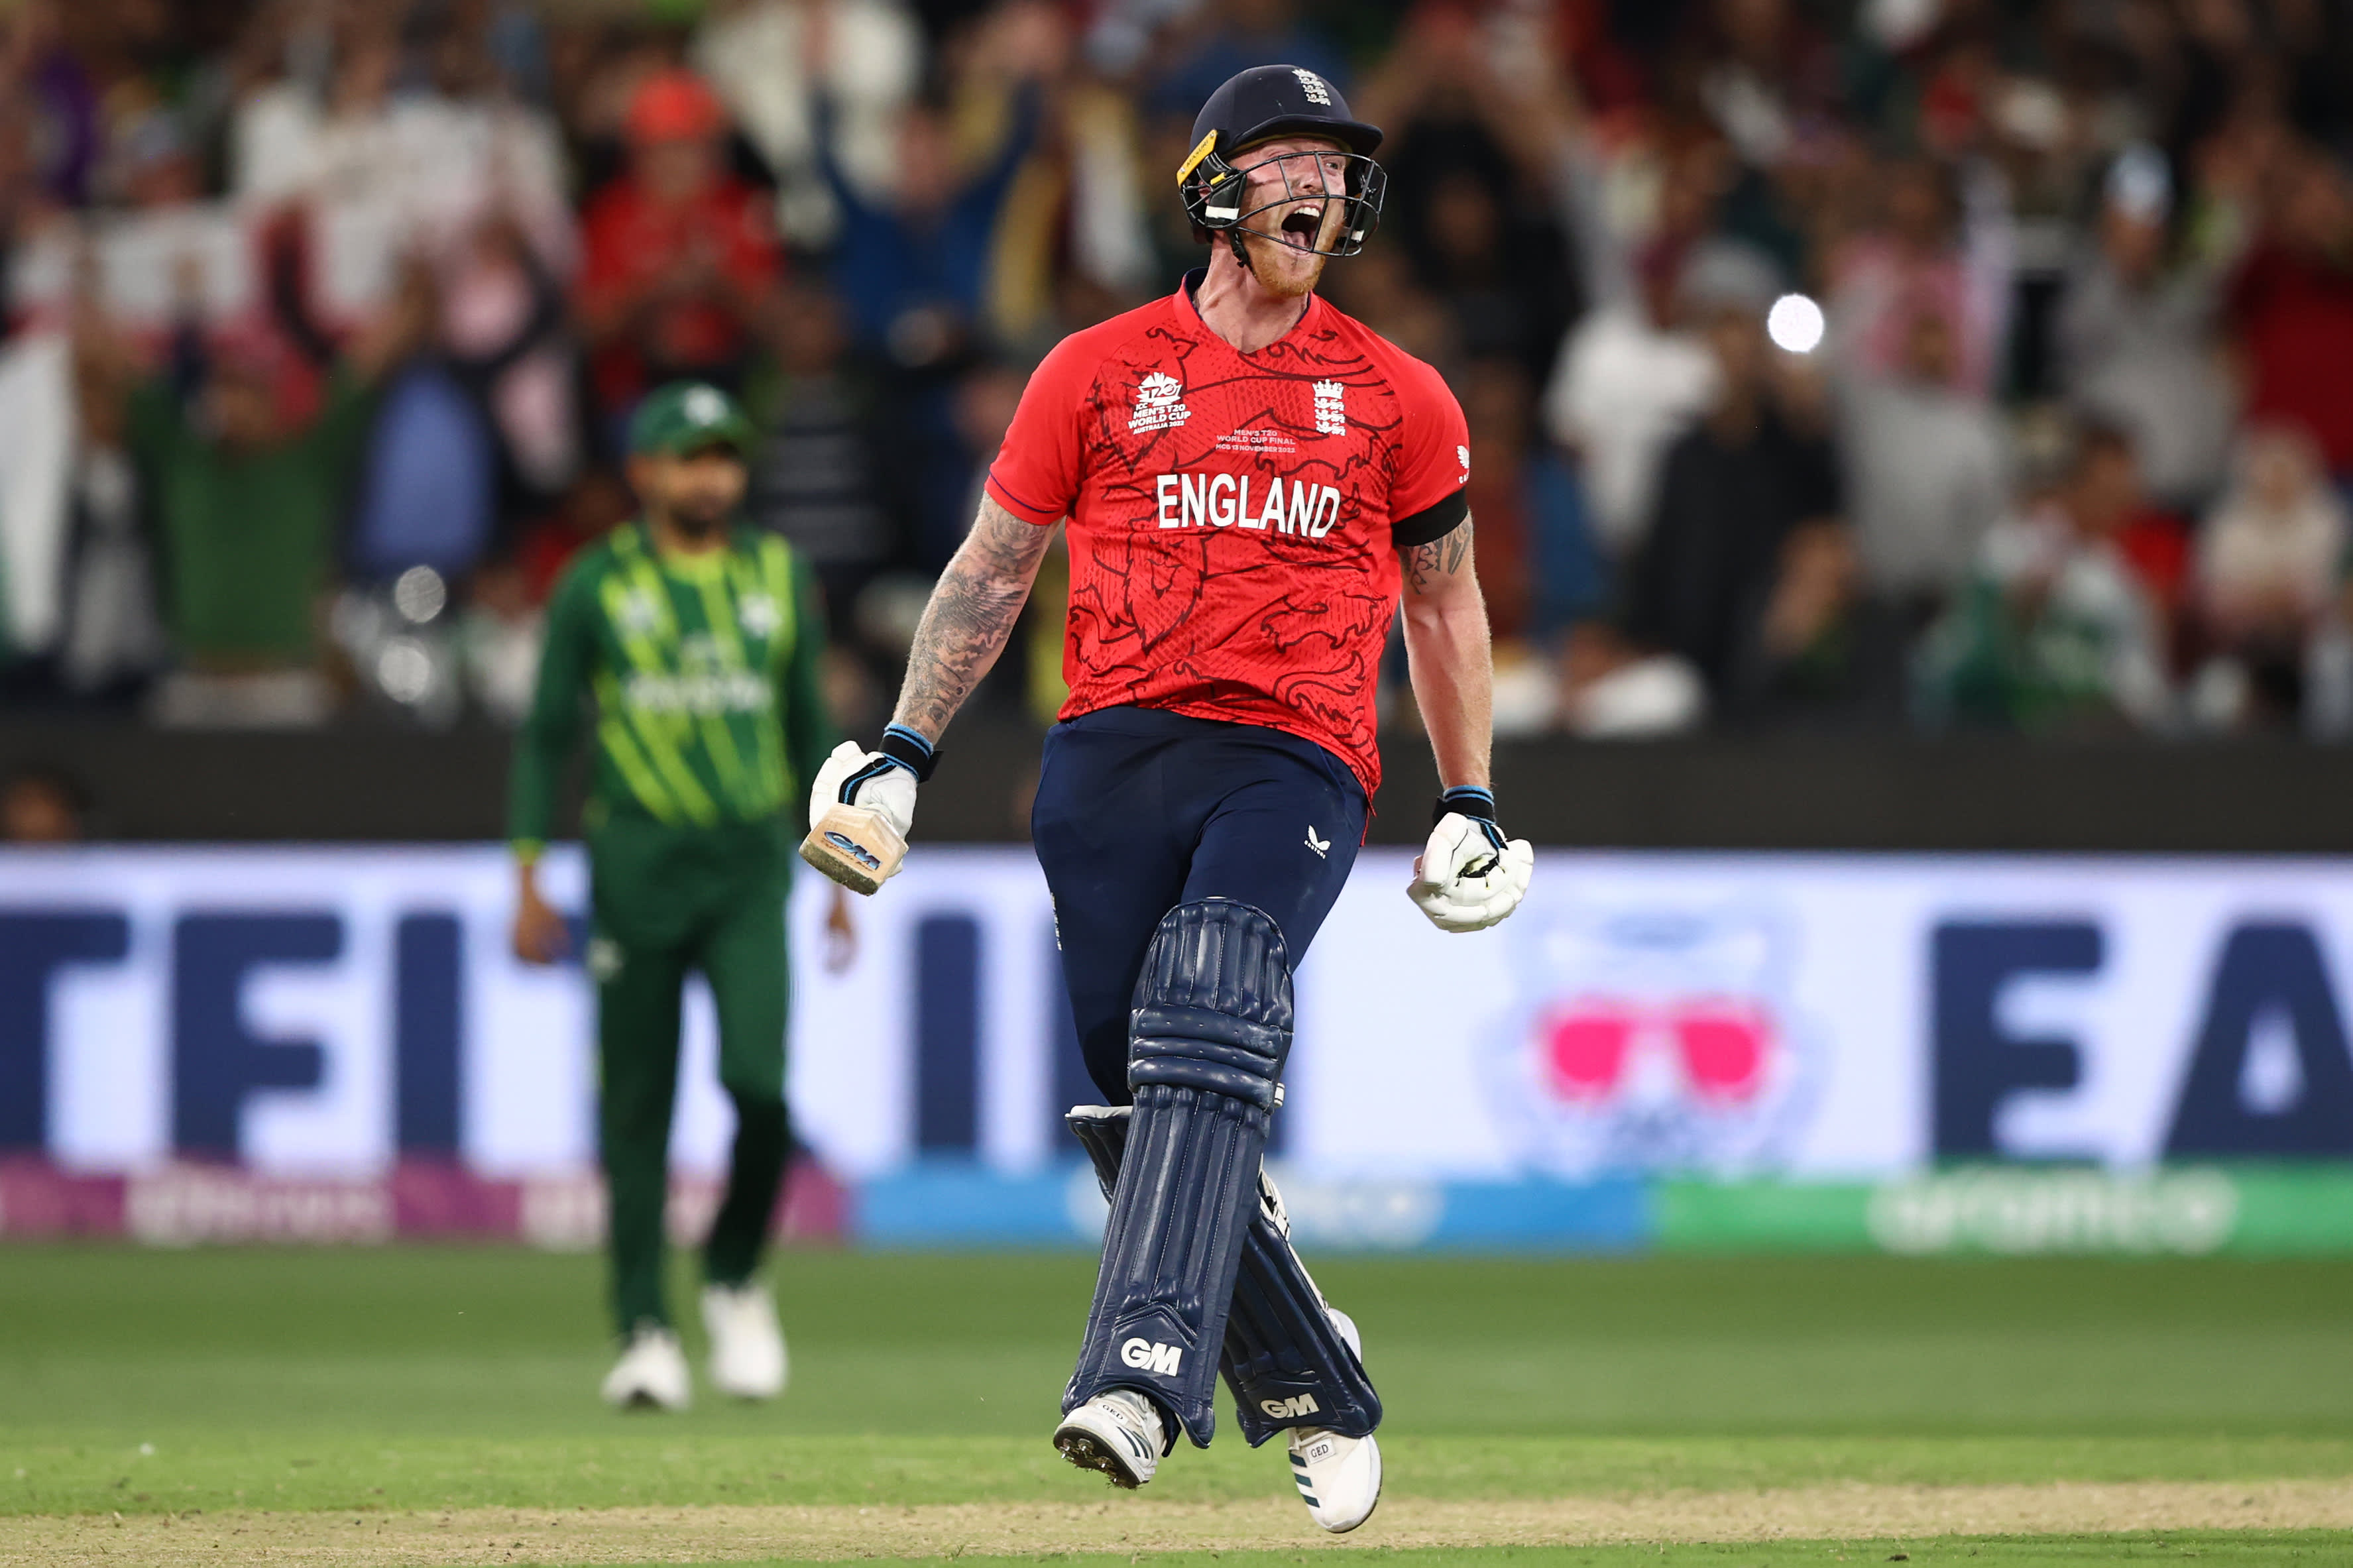 England beat Pakistan to win T20 World Cup at MCG as Ben Stokes stars